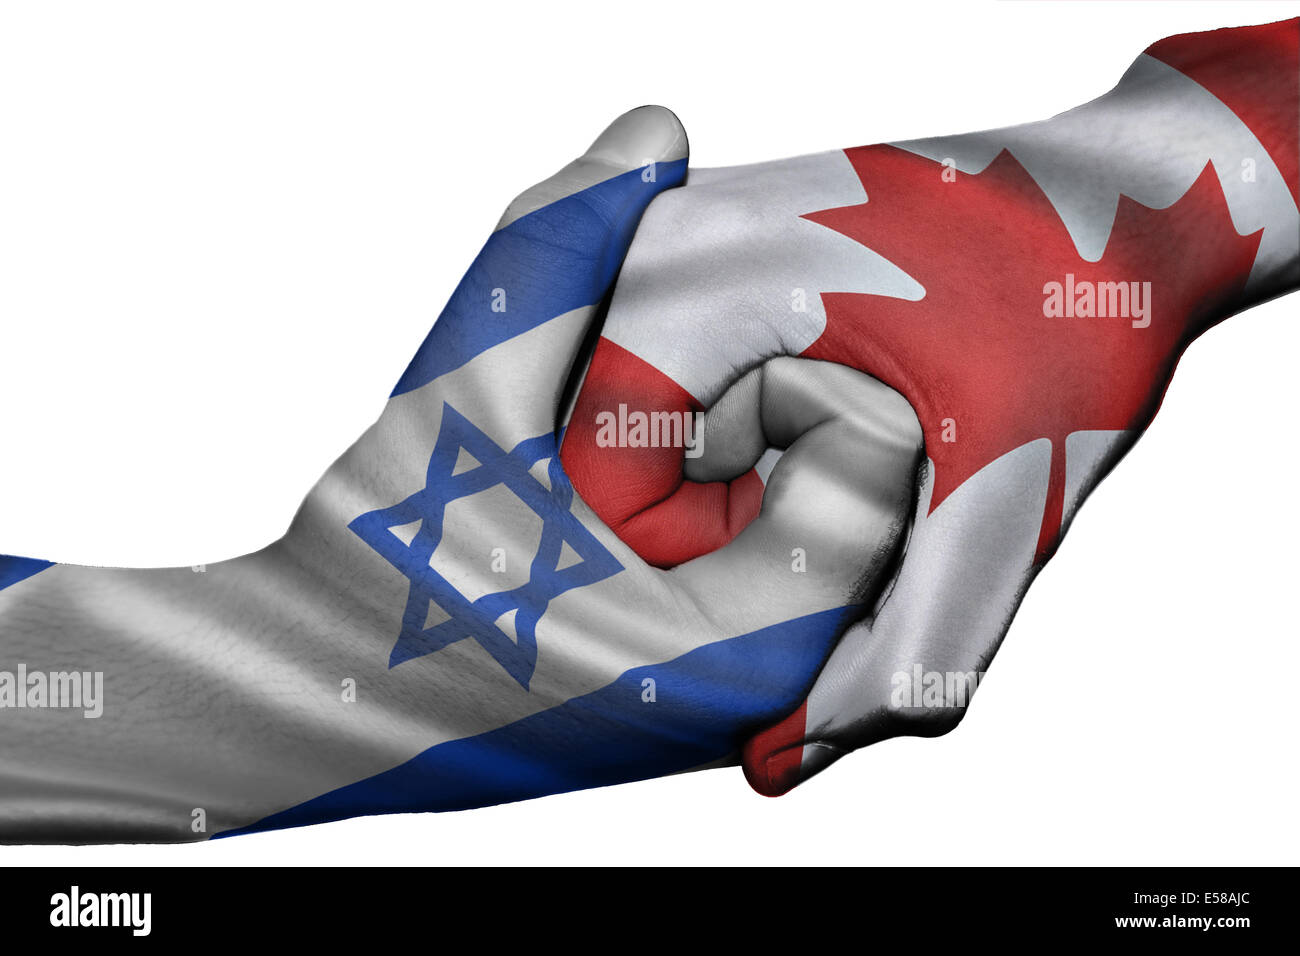 Handshake diplomatiche tra paesi: bandiere di Israele e Canada sovradipinta le due mani Foto Stock